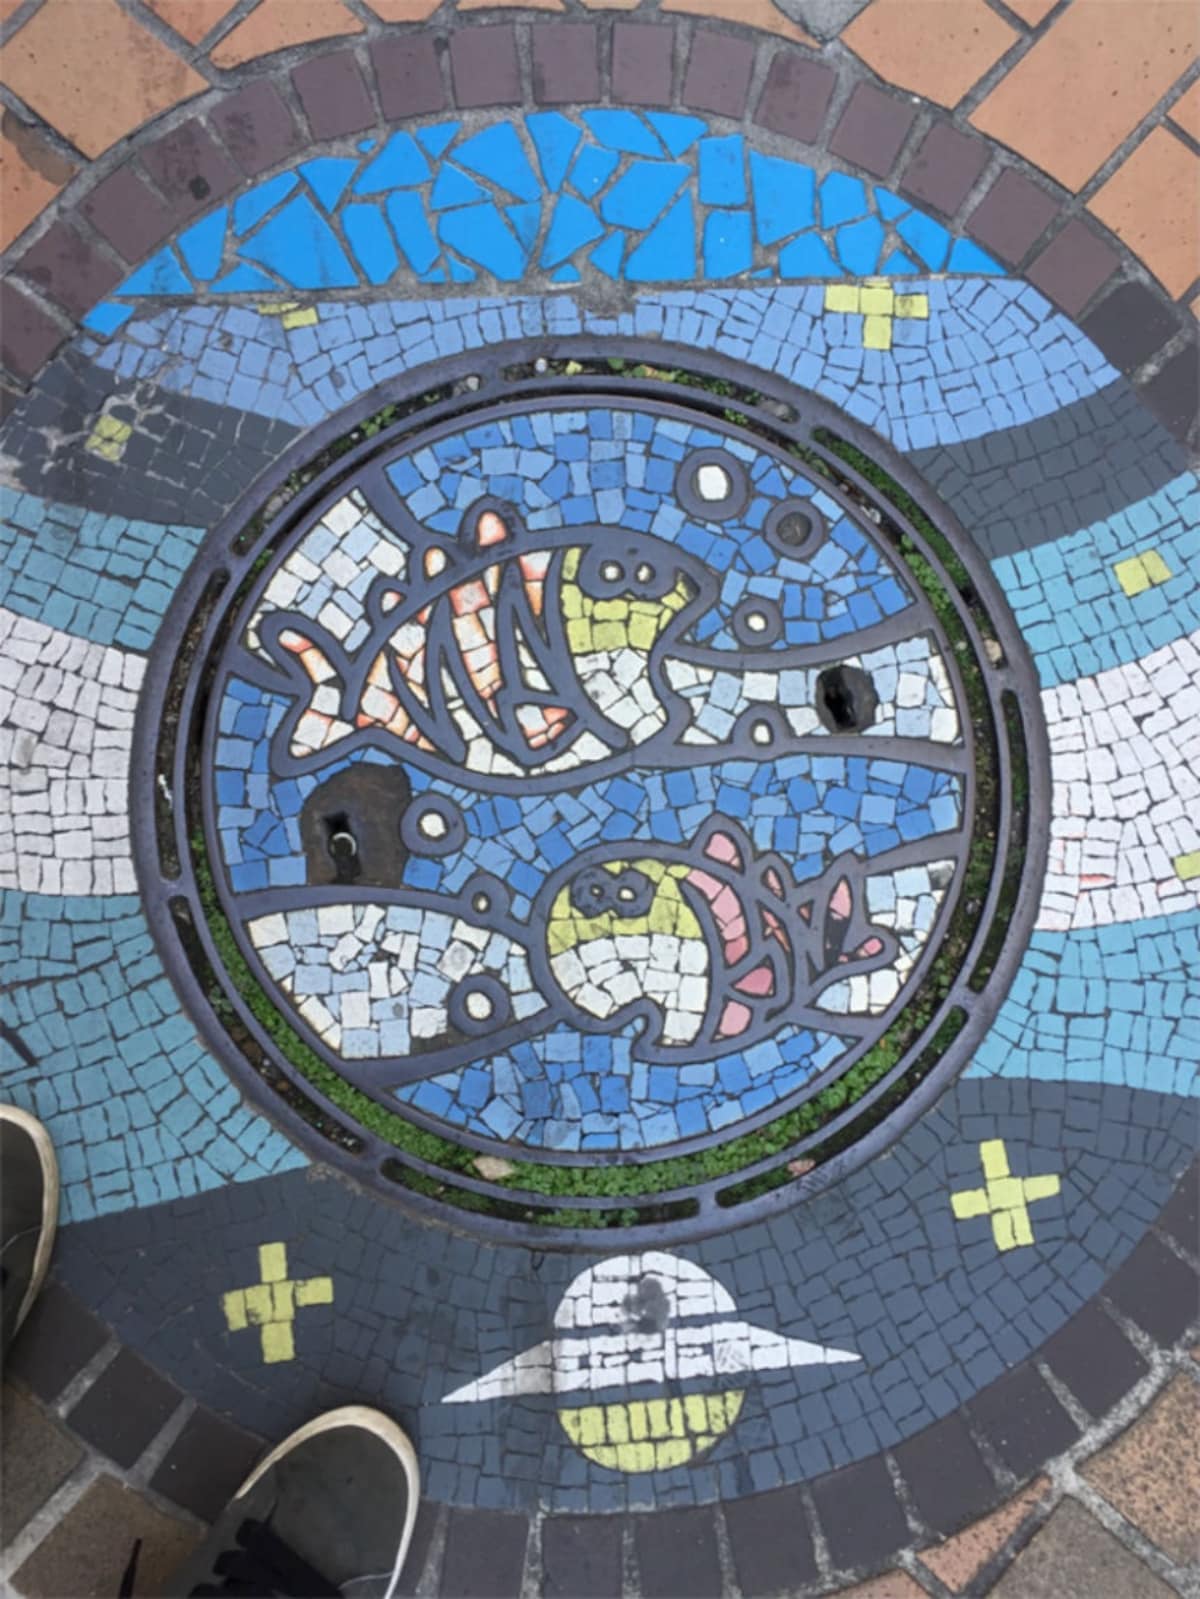 Tiled Manhole Cover in Kawaguchi City